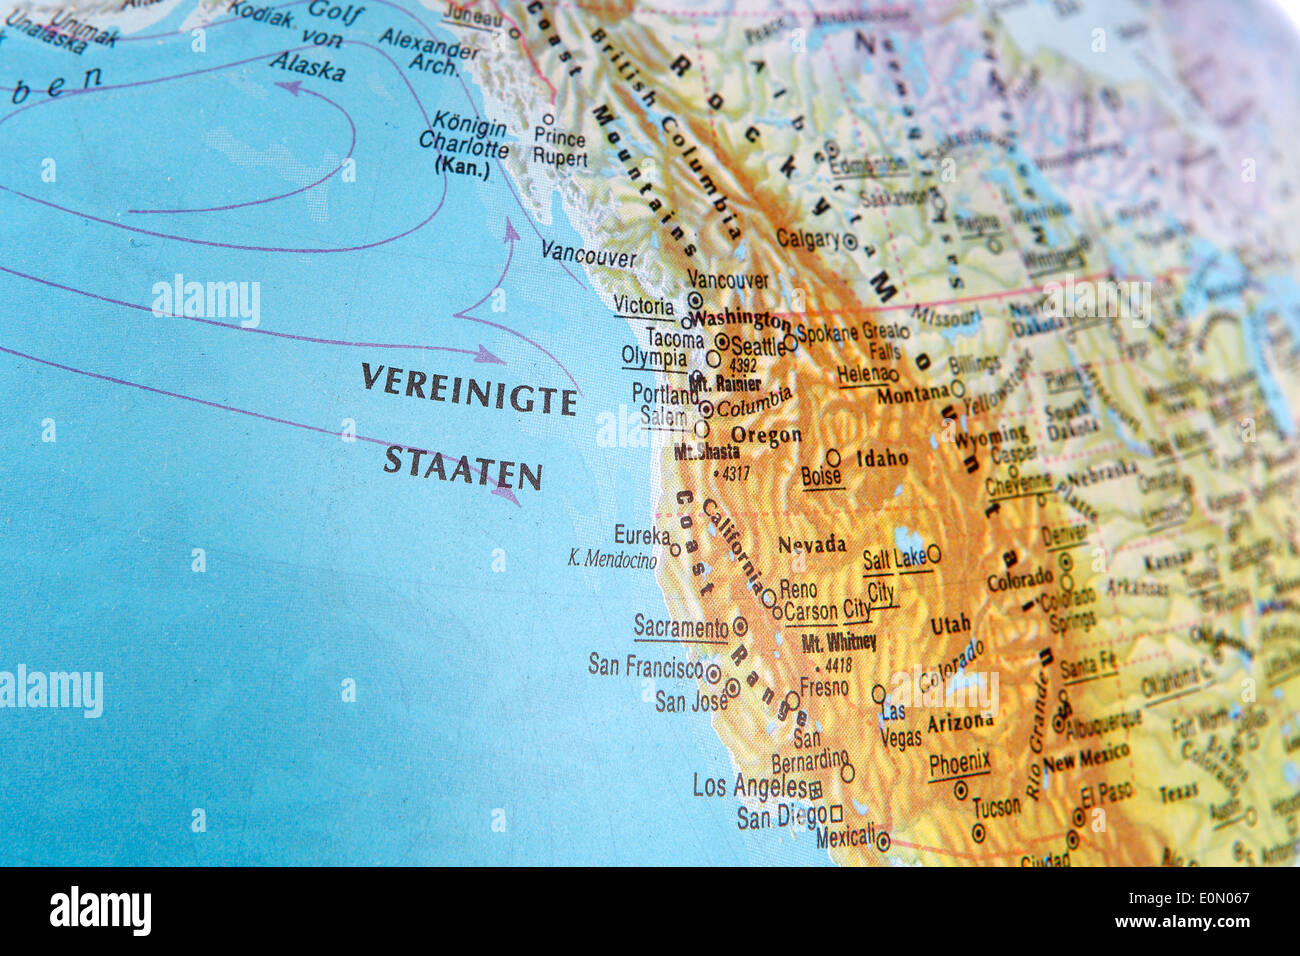 West coast of USA on the globe Stock Photo